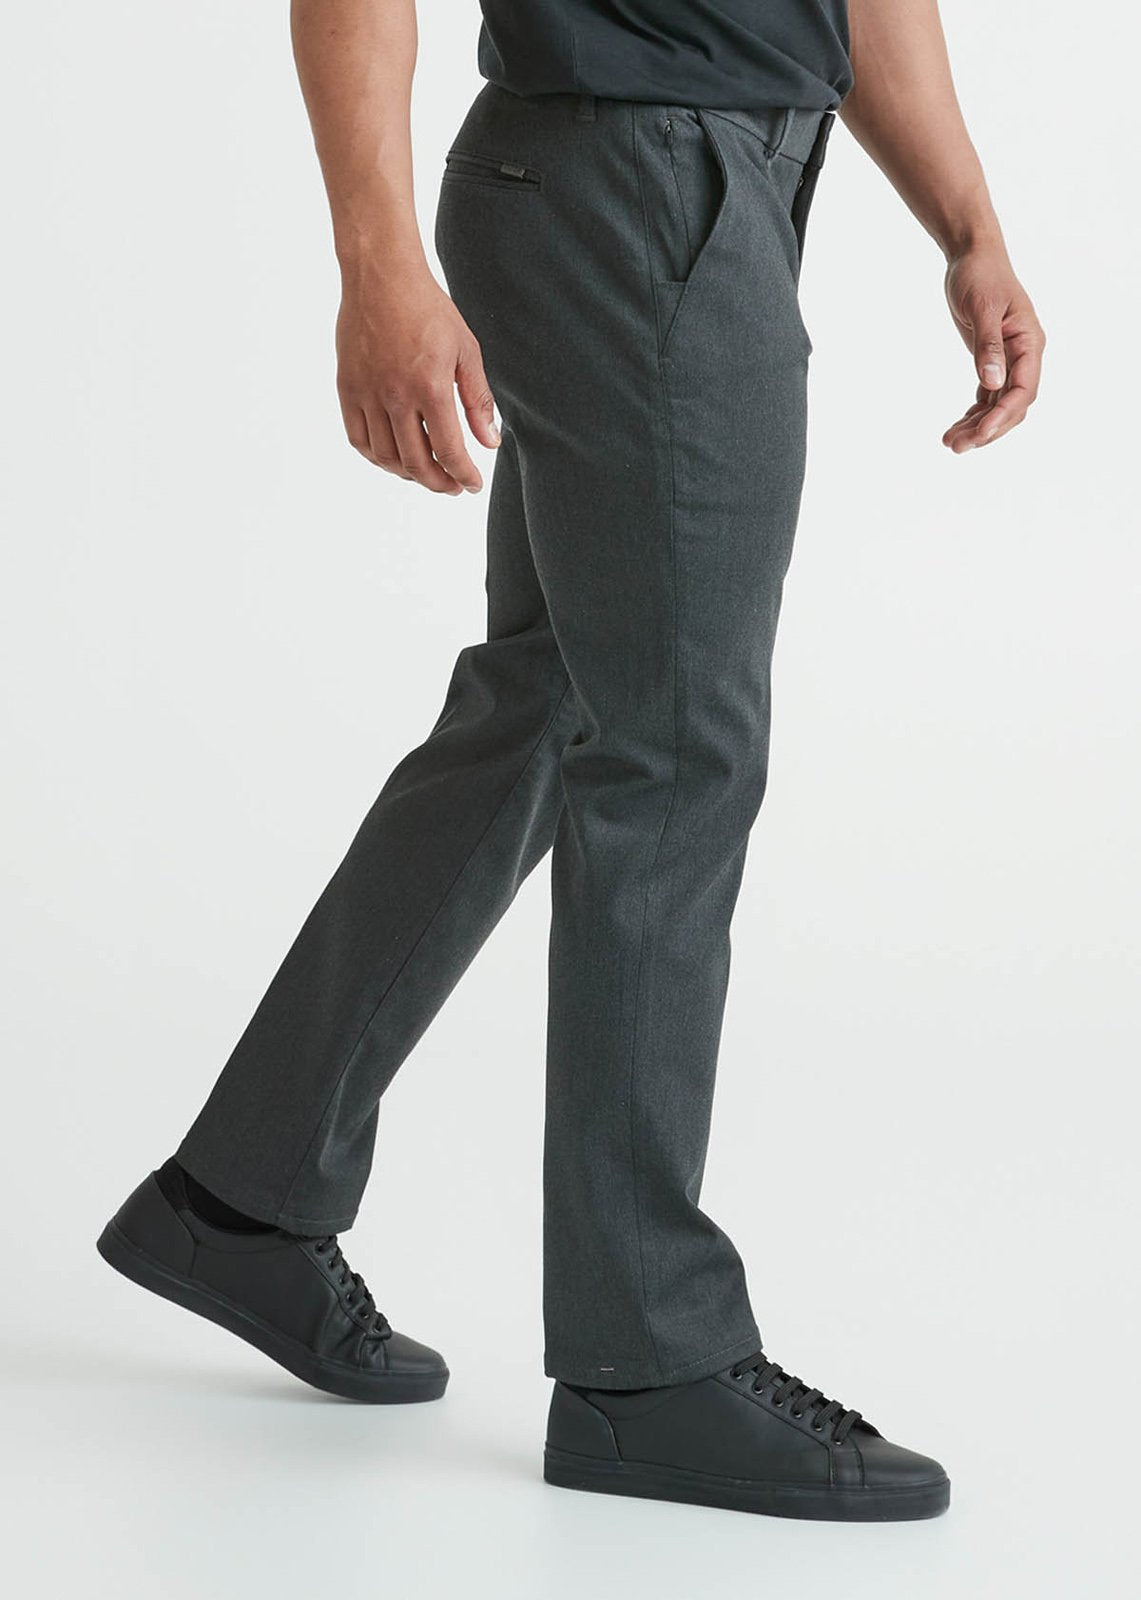 Men's Tall Zip Bottom A.T. Performance Pant Charcoal Mix